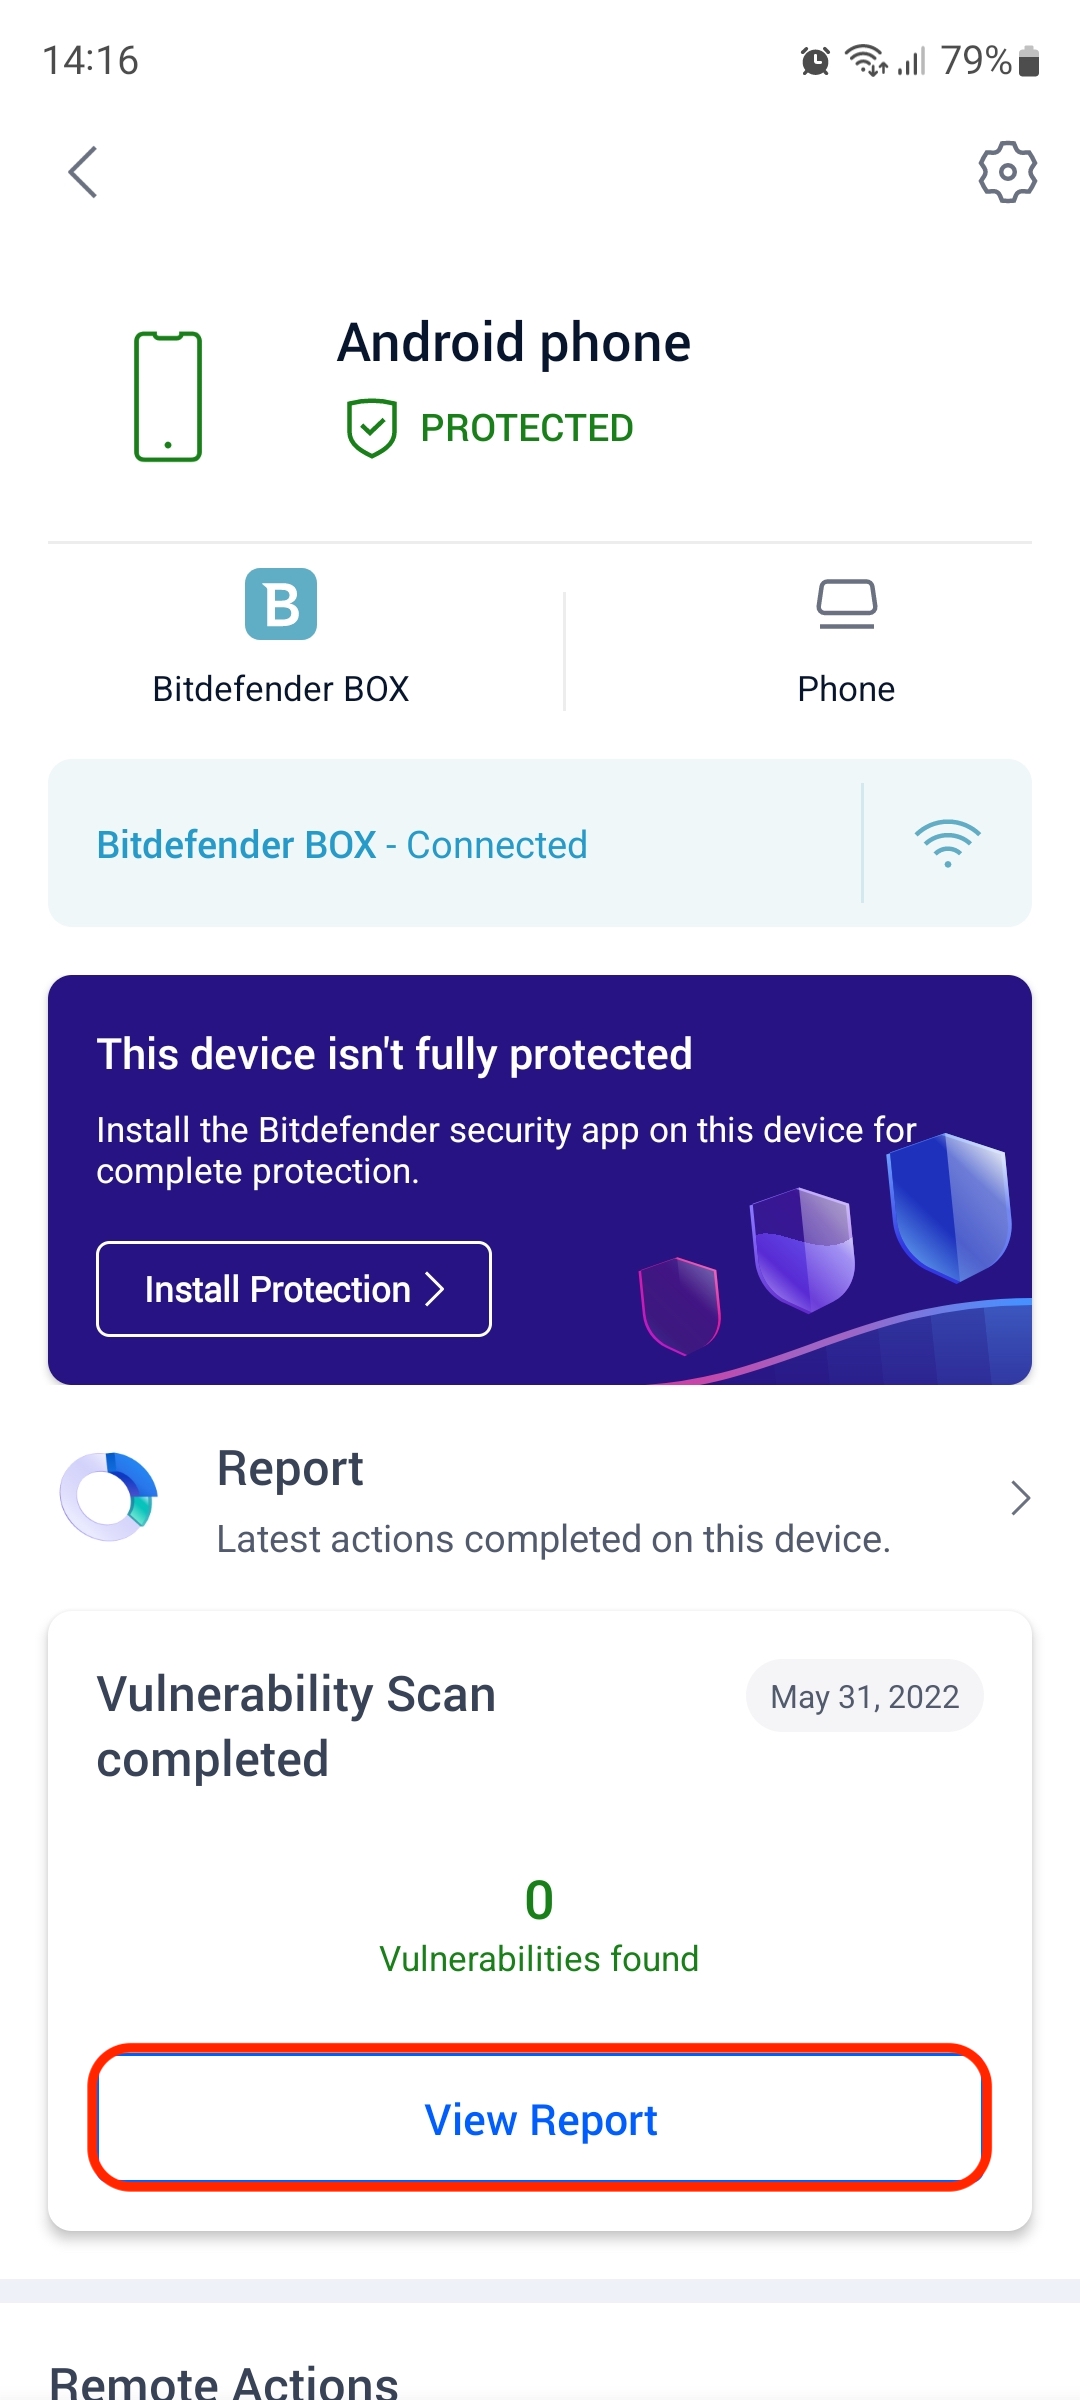 Bitdefender BOX - Vulnerability Scan report